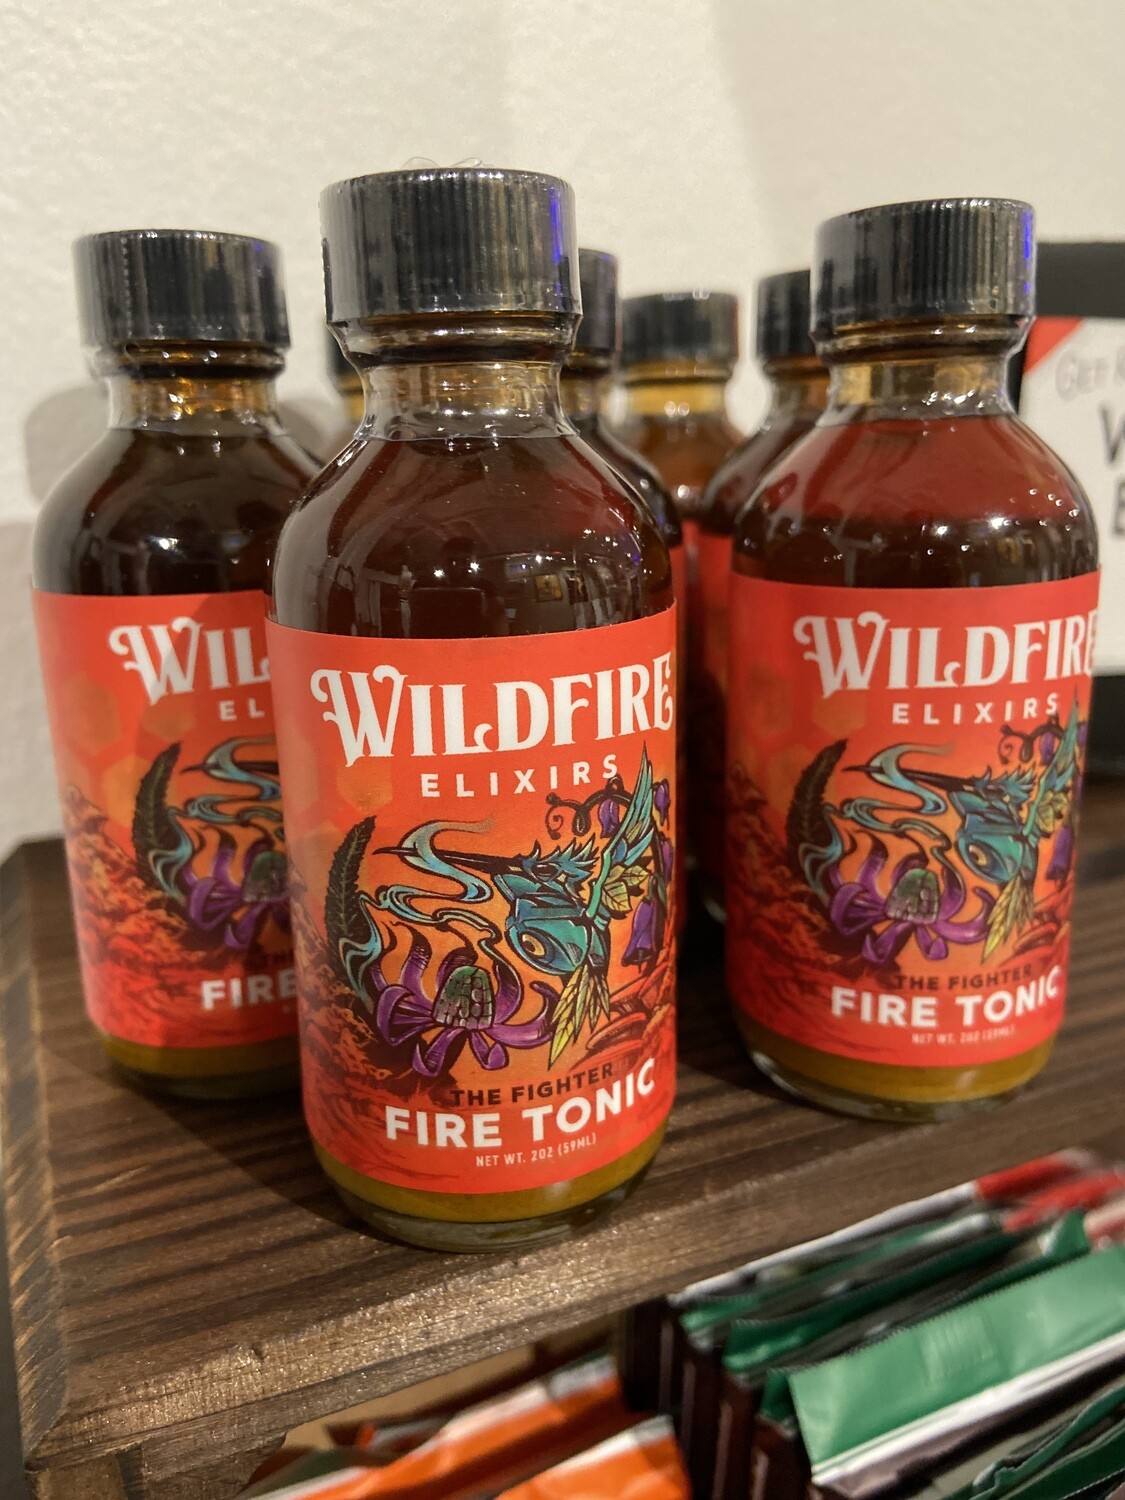 Wild fire tonic